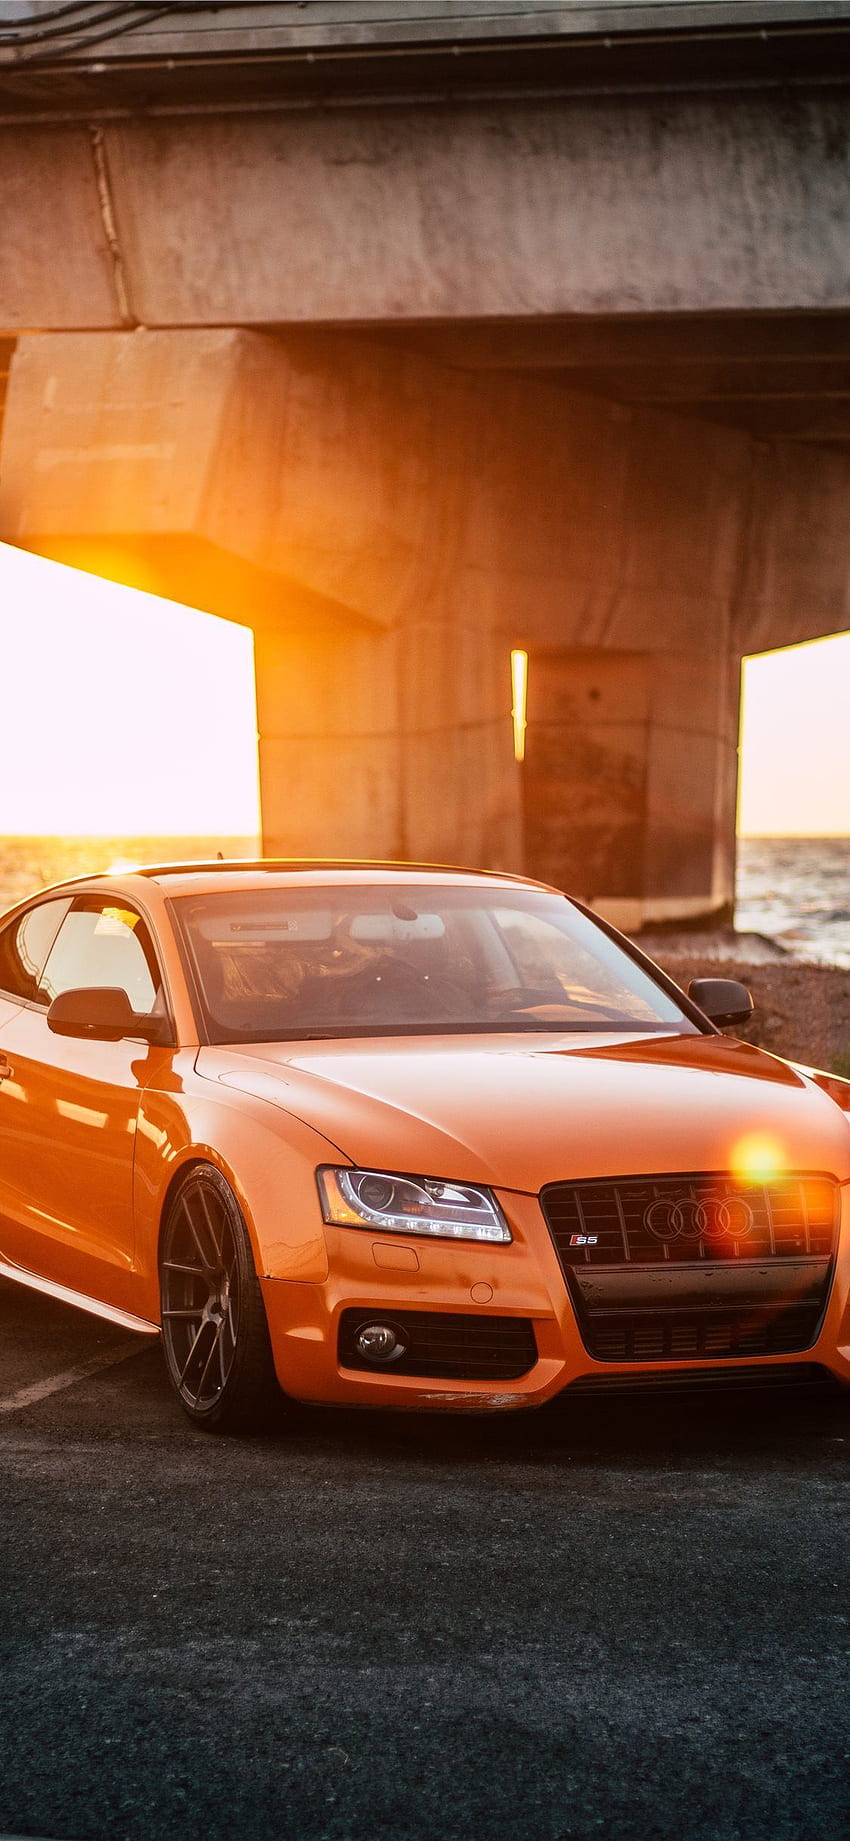 cupê Audi laranja estacionado em estrada de concreto cinza Papel de parede de celular HD